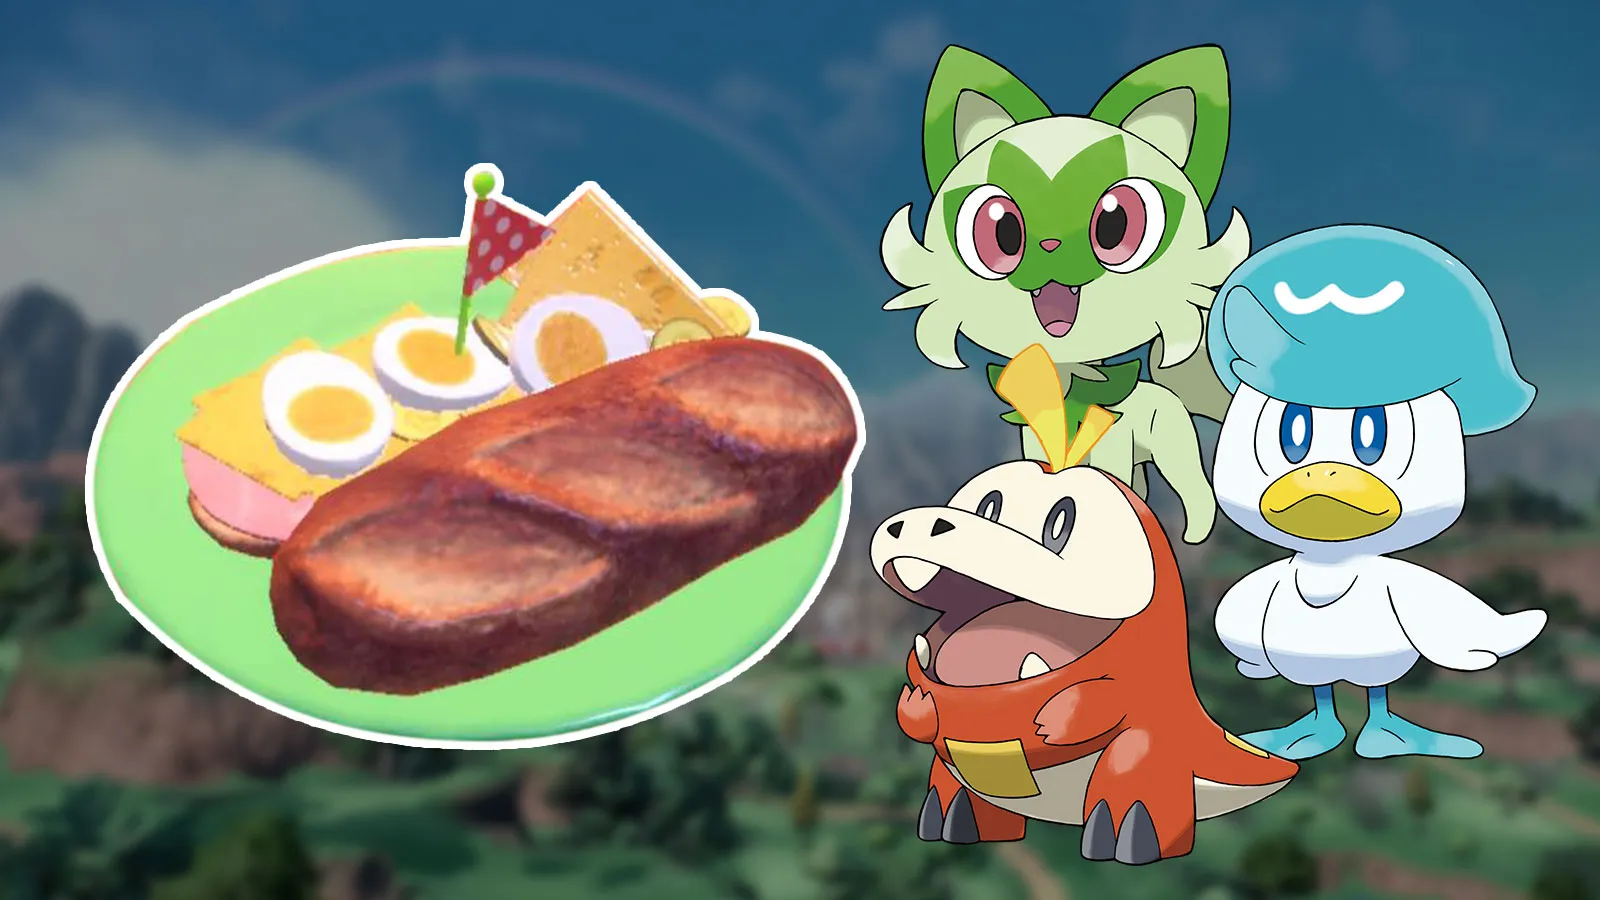 The best sandwich recipes to hunt shinies in Pokémon Scarlet...